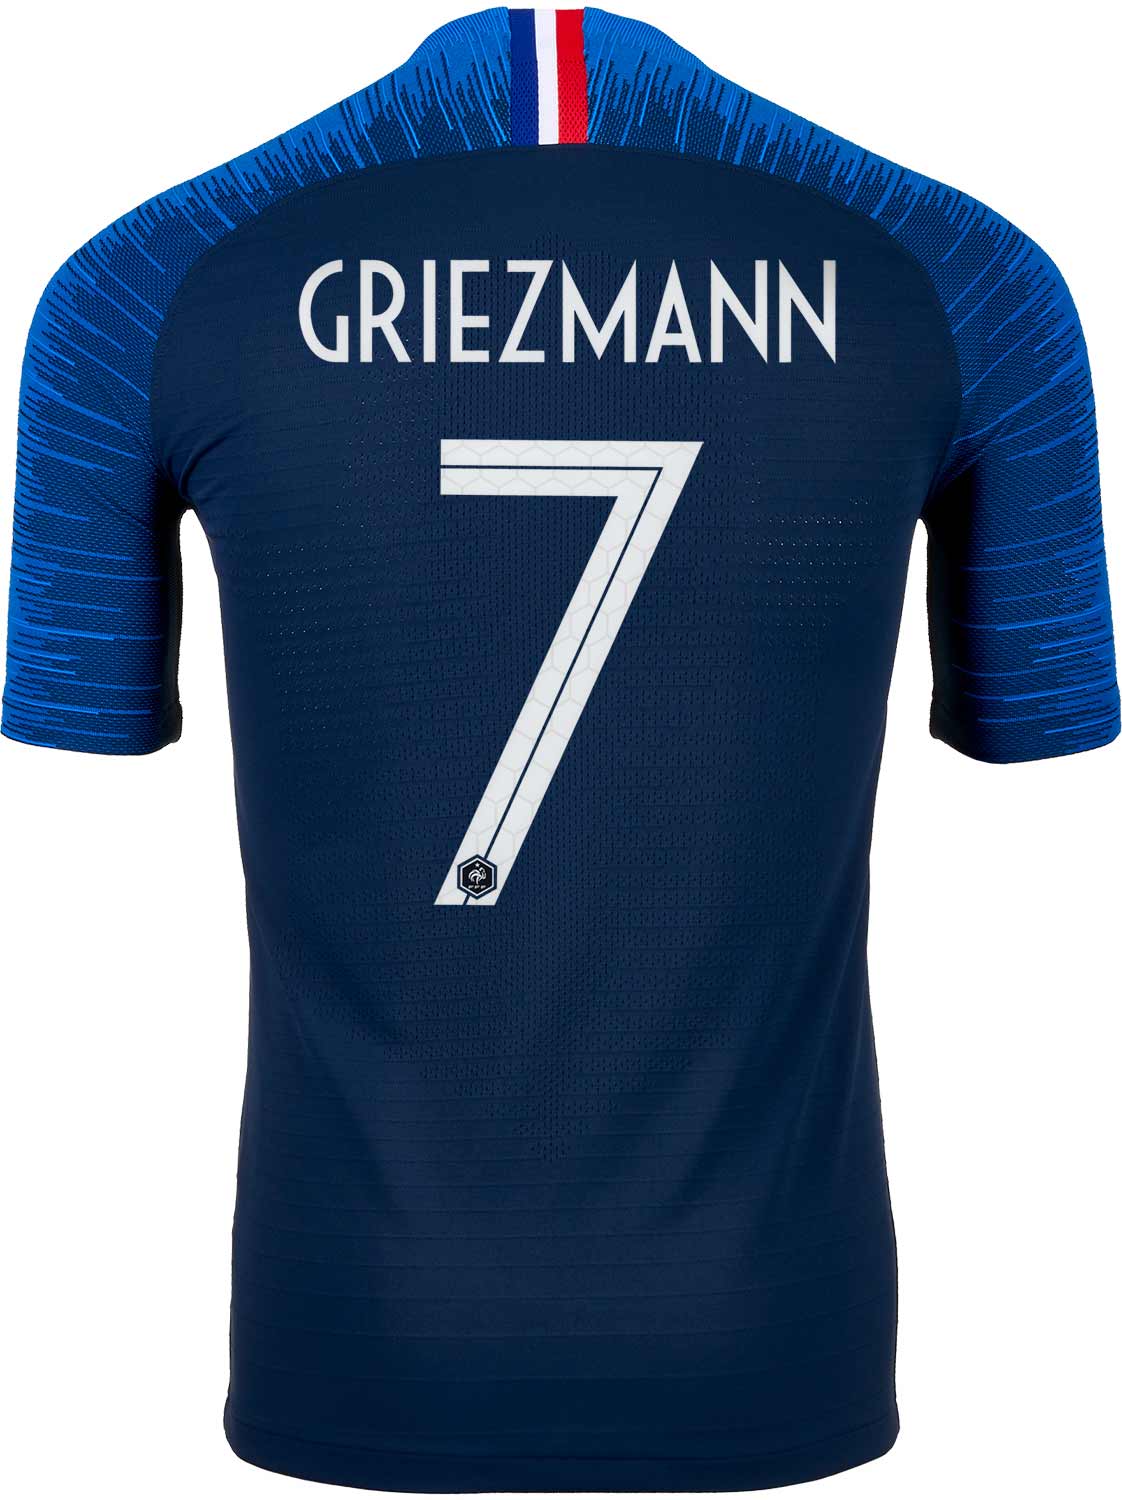 2018/19 Nike Antoine Griezmann France Home Match Jersey - SoccerPro